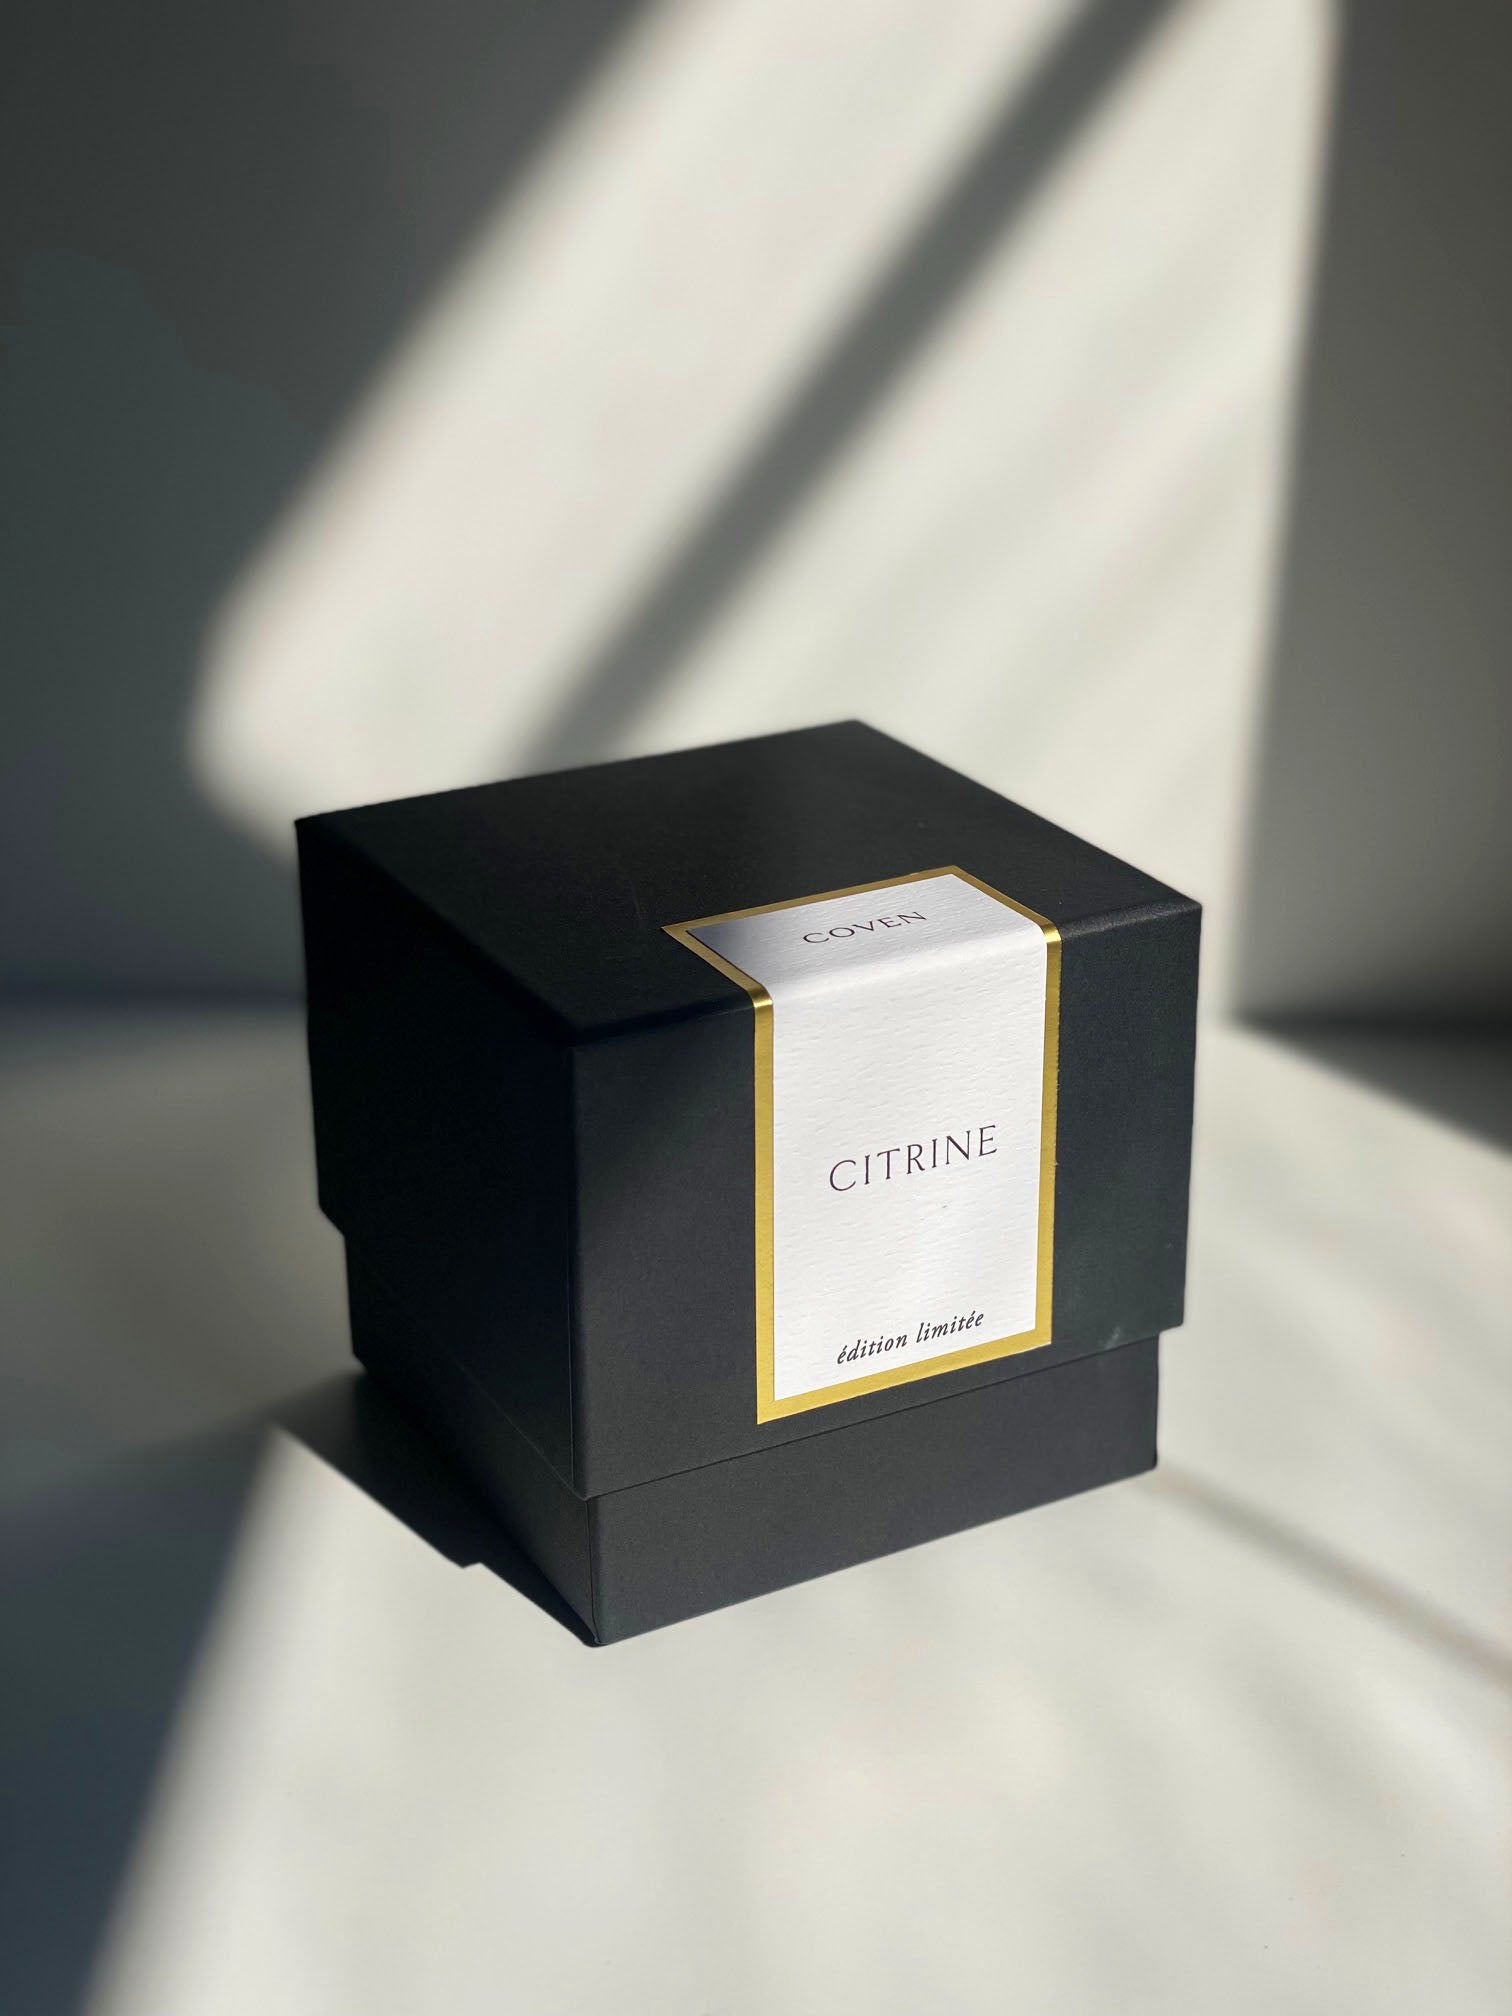 Coven Citrine Incense Cones - Limited Edition – Aquelarre Shop